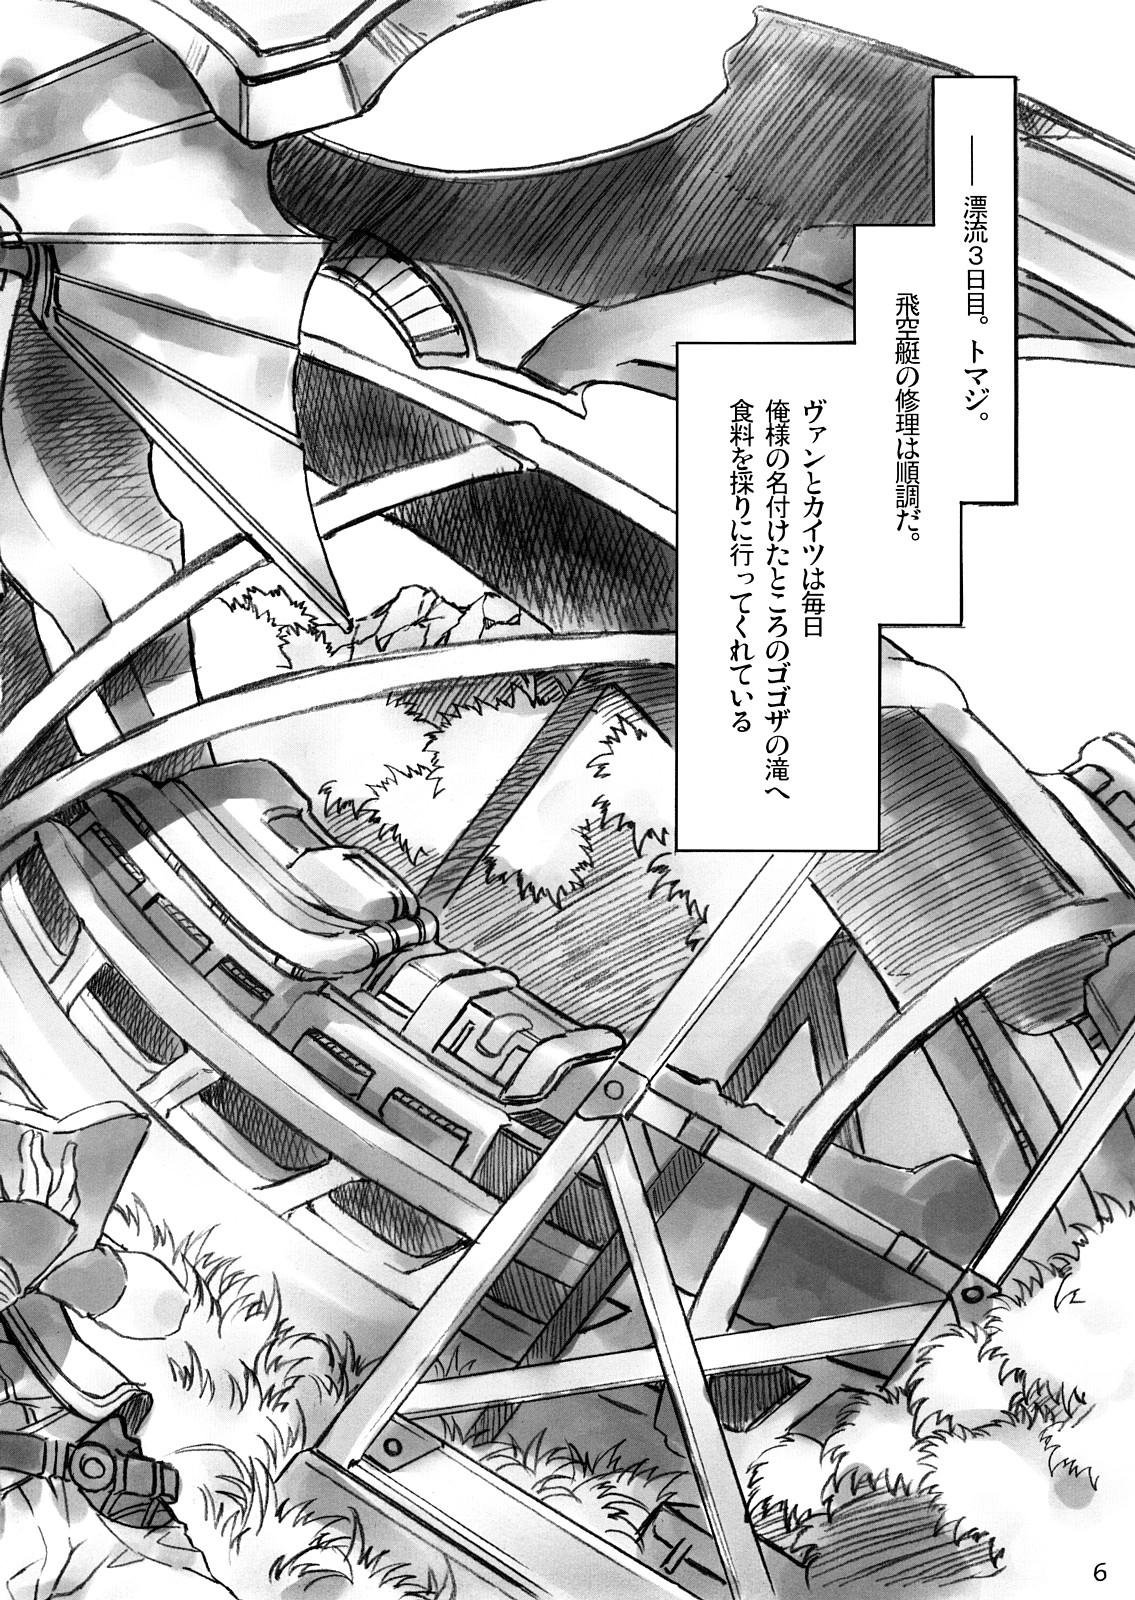 Messy Kokokara Fuzoku Date - Final fantasy xii Culos - Page 5